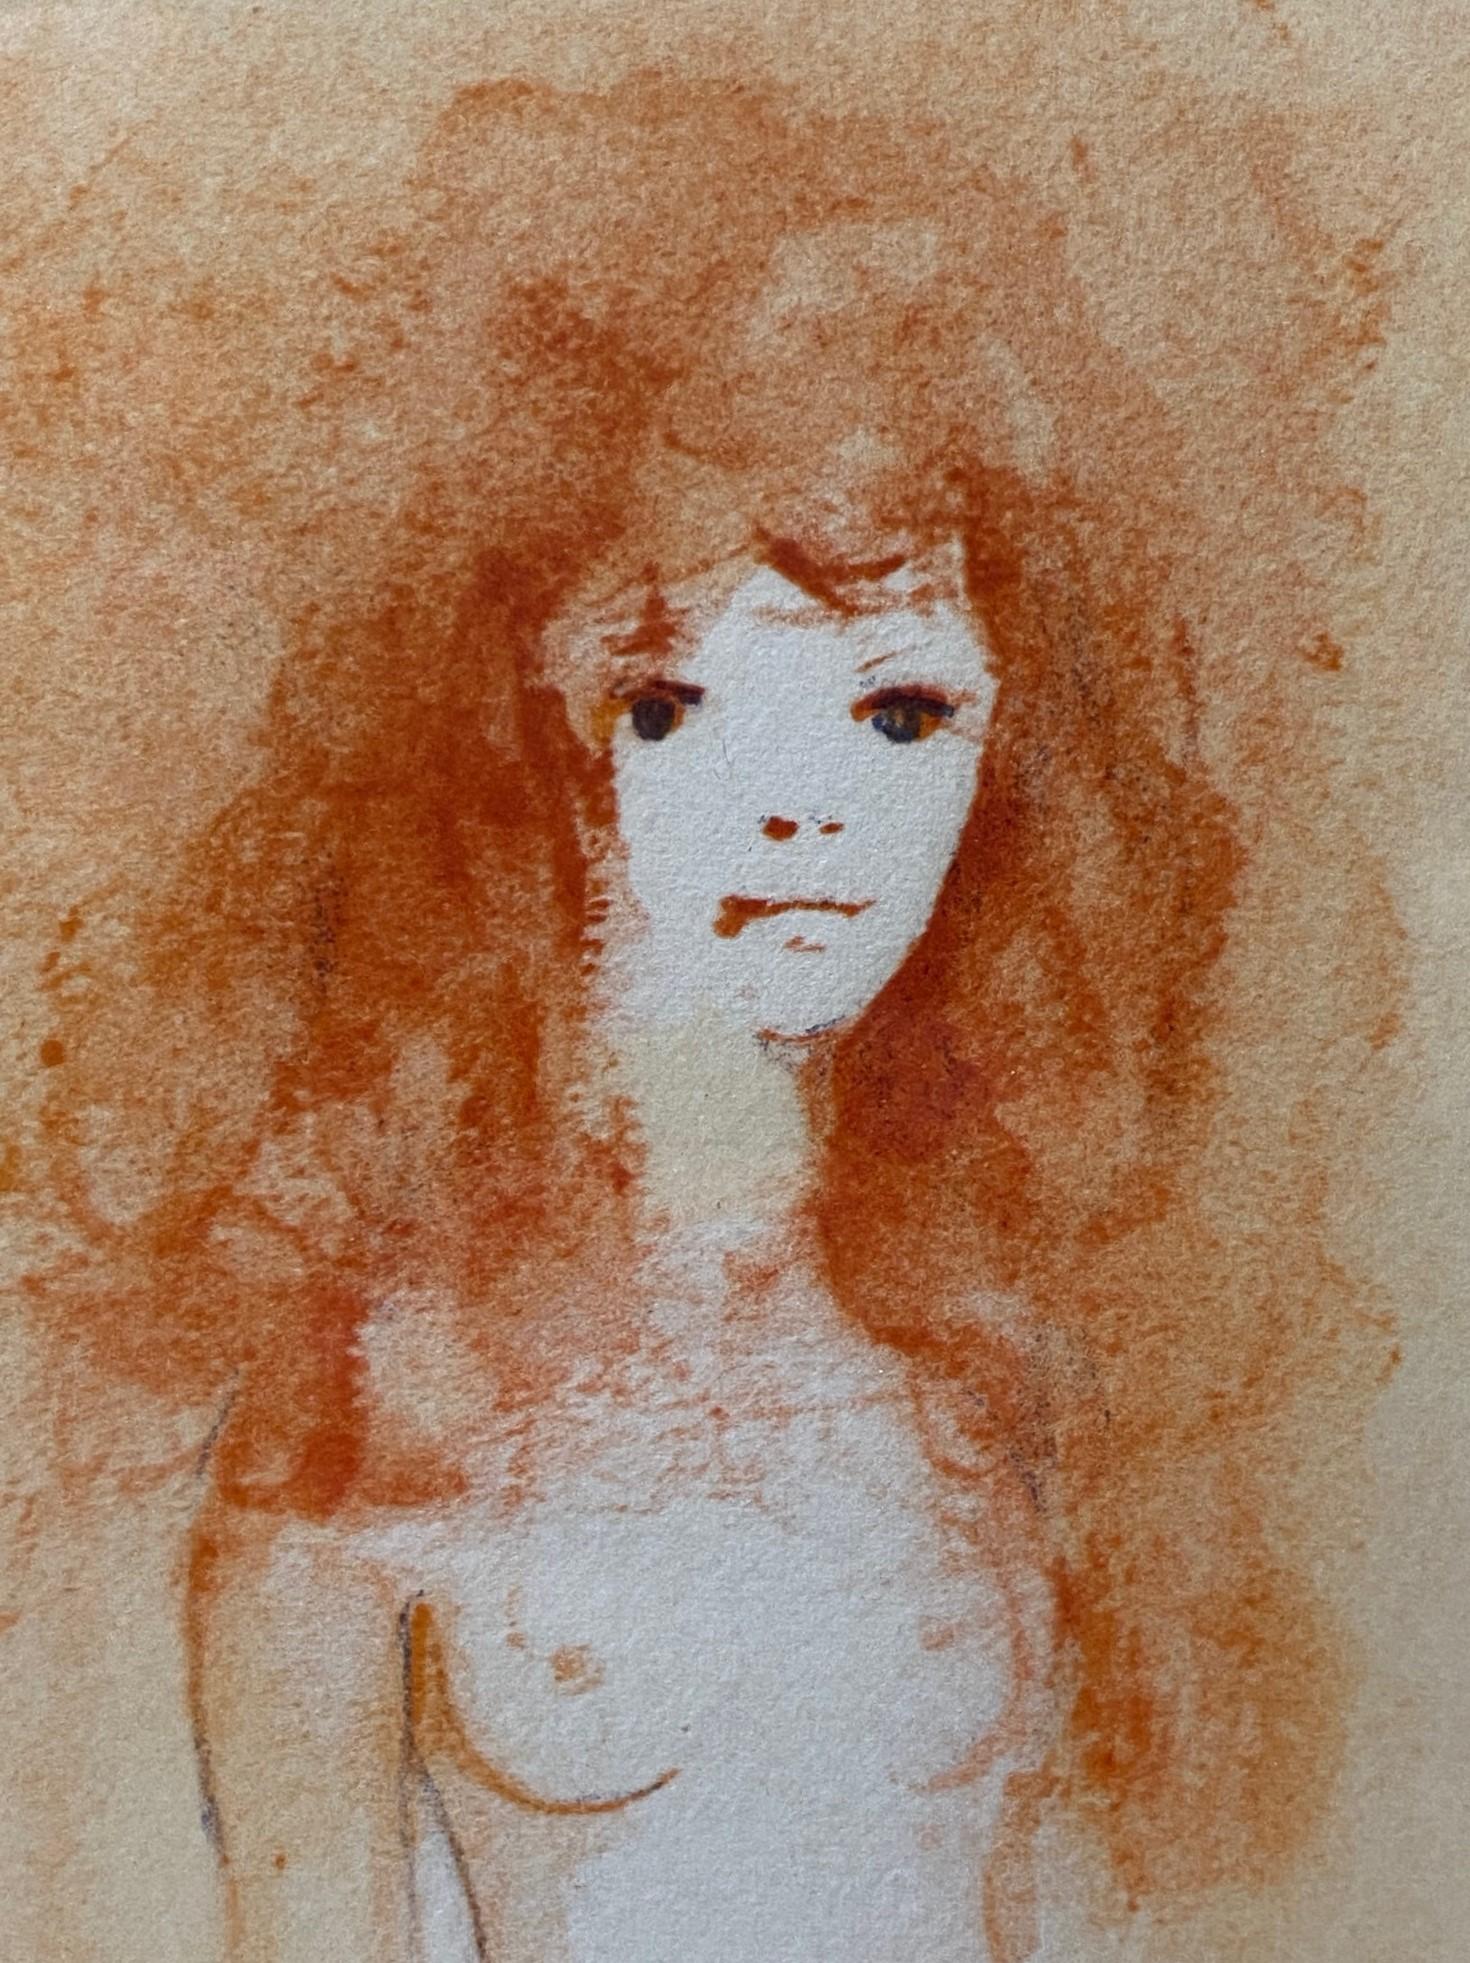 Signierter gerahmter Lithograh-Druck Femme Avec Cheveux Rouge von Leonor Fini, ca. 1970er Jahre (Ende des 20. Jahrhunderts) im Angebot